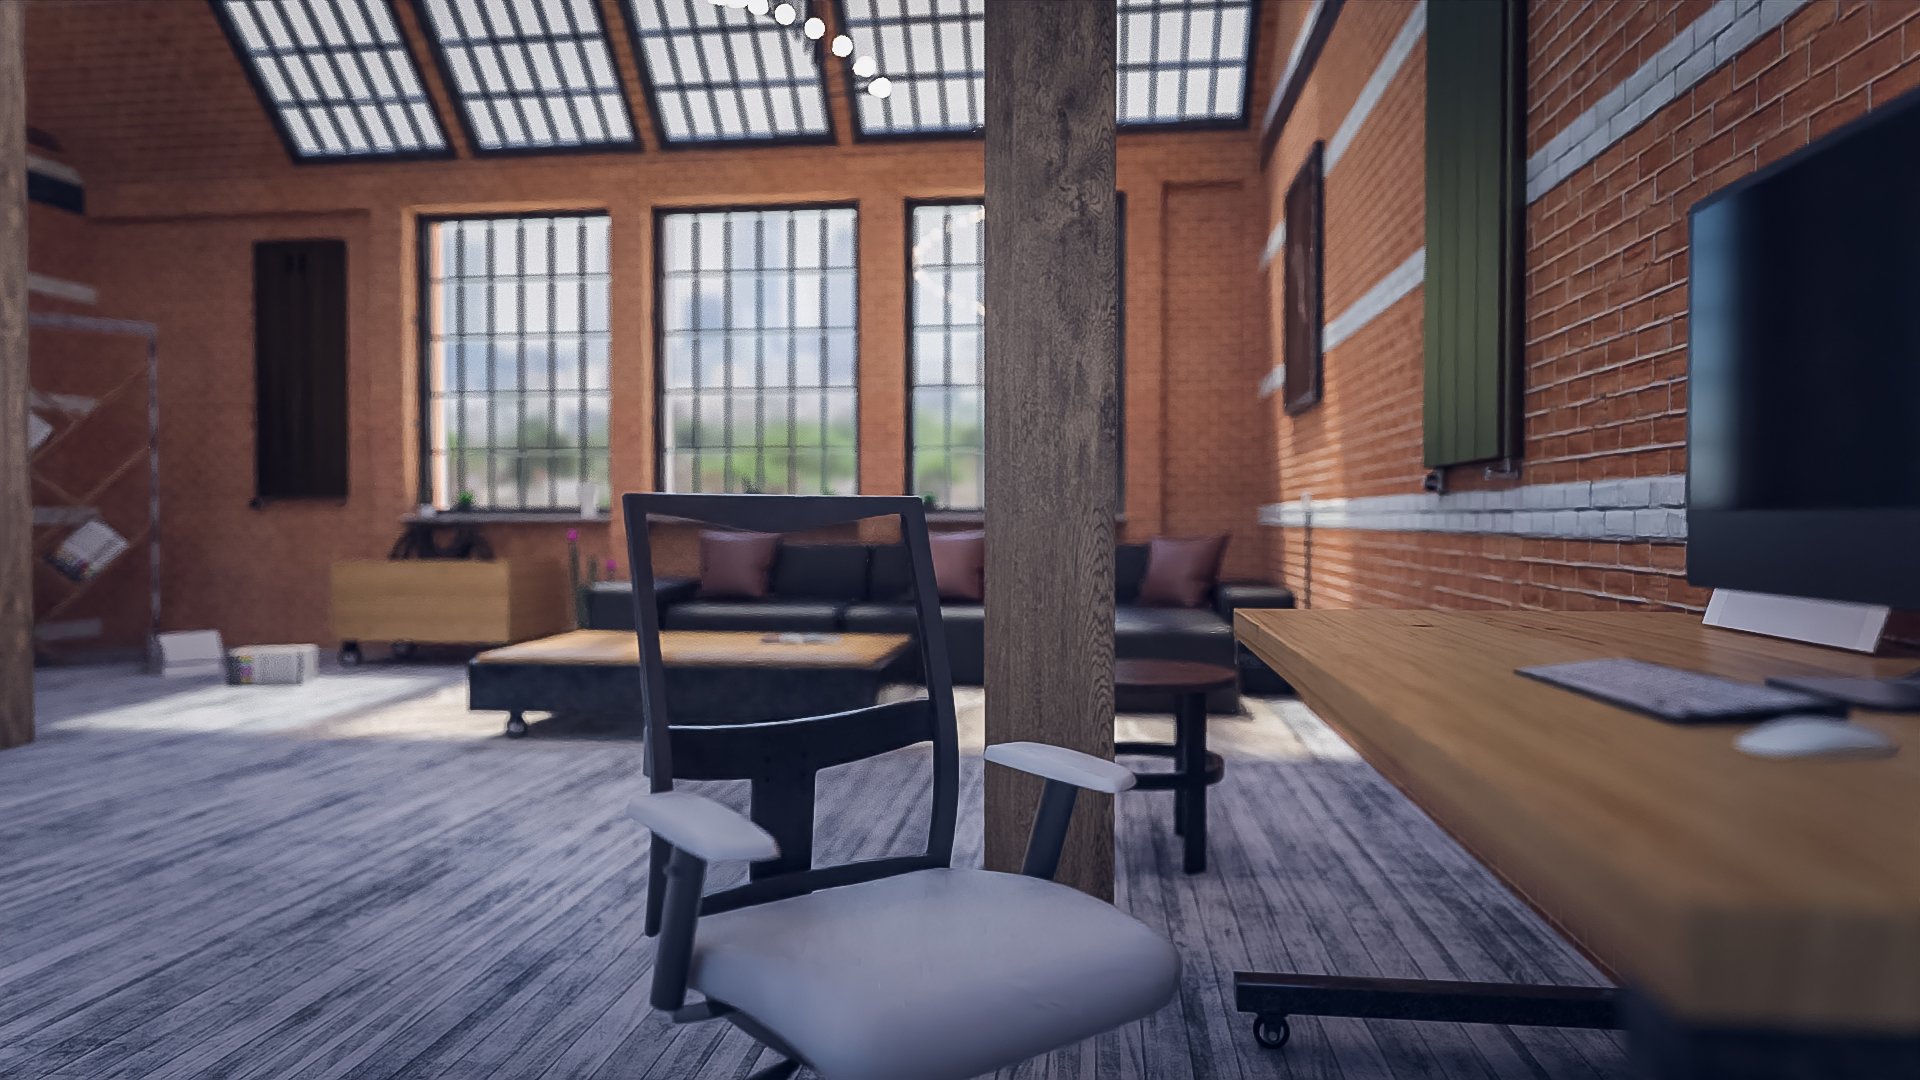 TS Streamlined Living Room by: Tesla3dCorp, 3D Models by Daz 3D